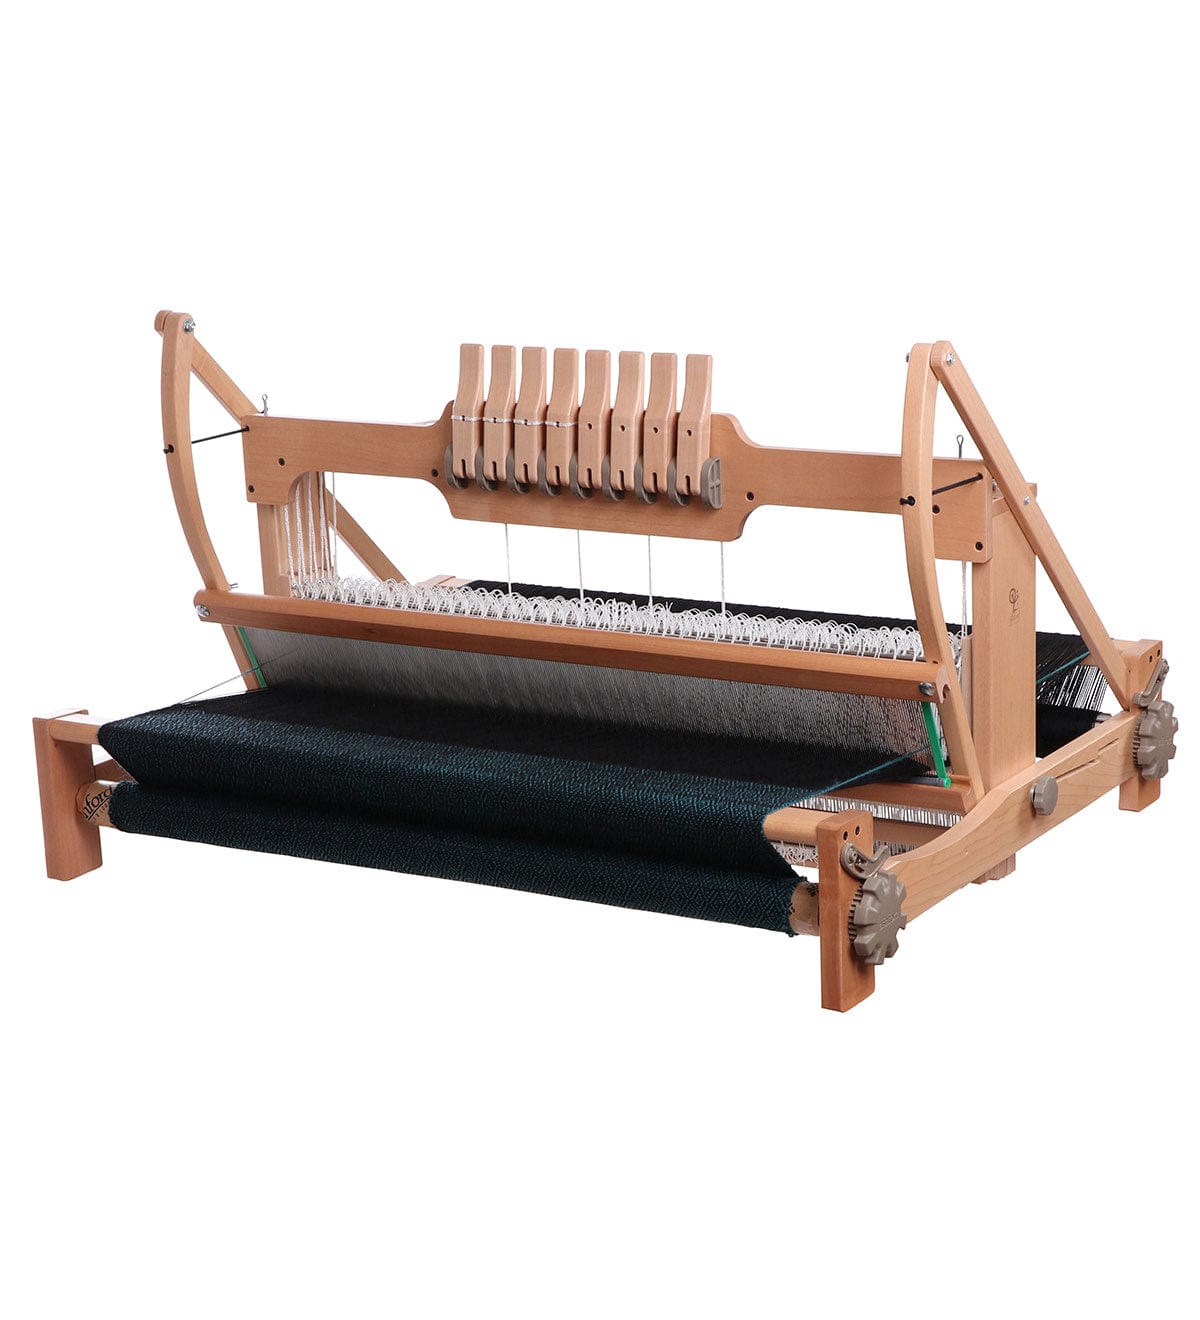 Ashford Weaving Looms Ashford 8 Shaft Table Loom